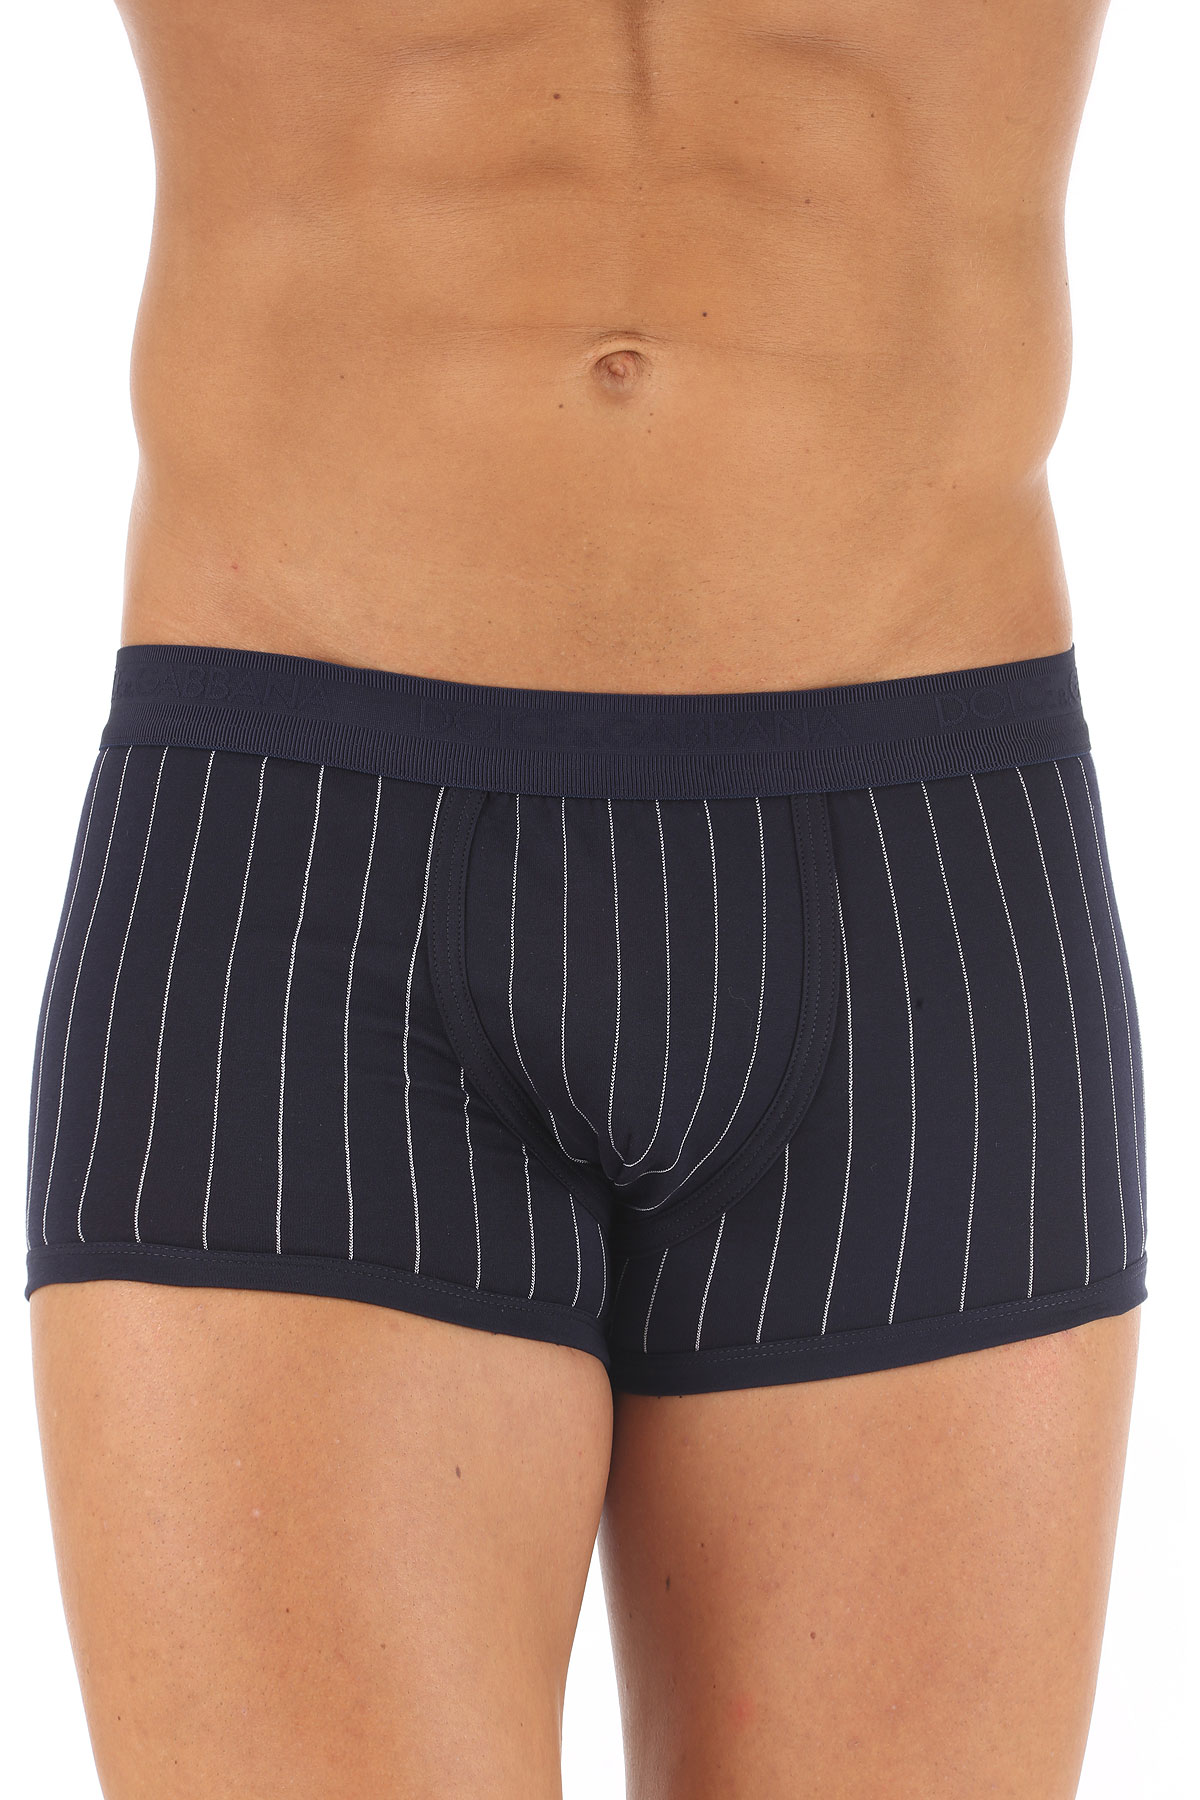 Mens Underwear Dolce & Gabbana, Style code: n4a50j-fj7bb-b0387